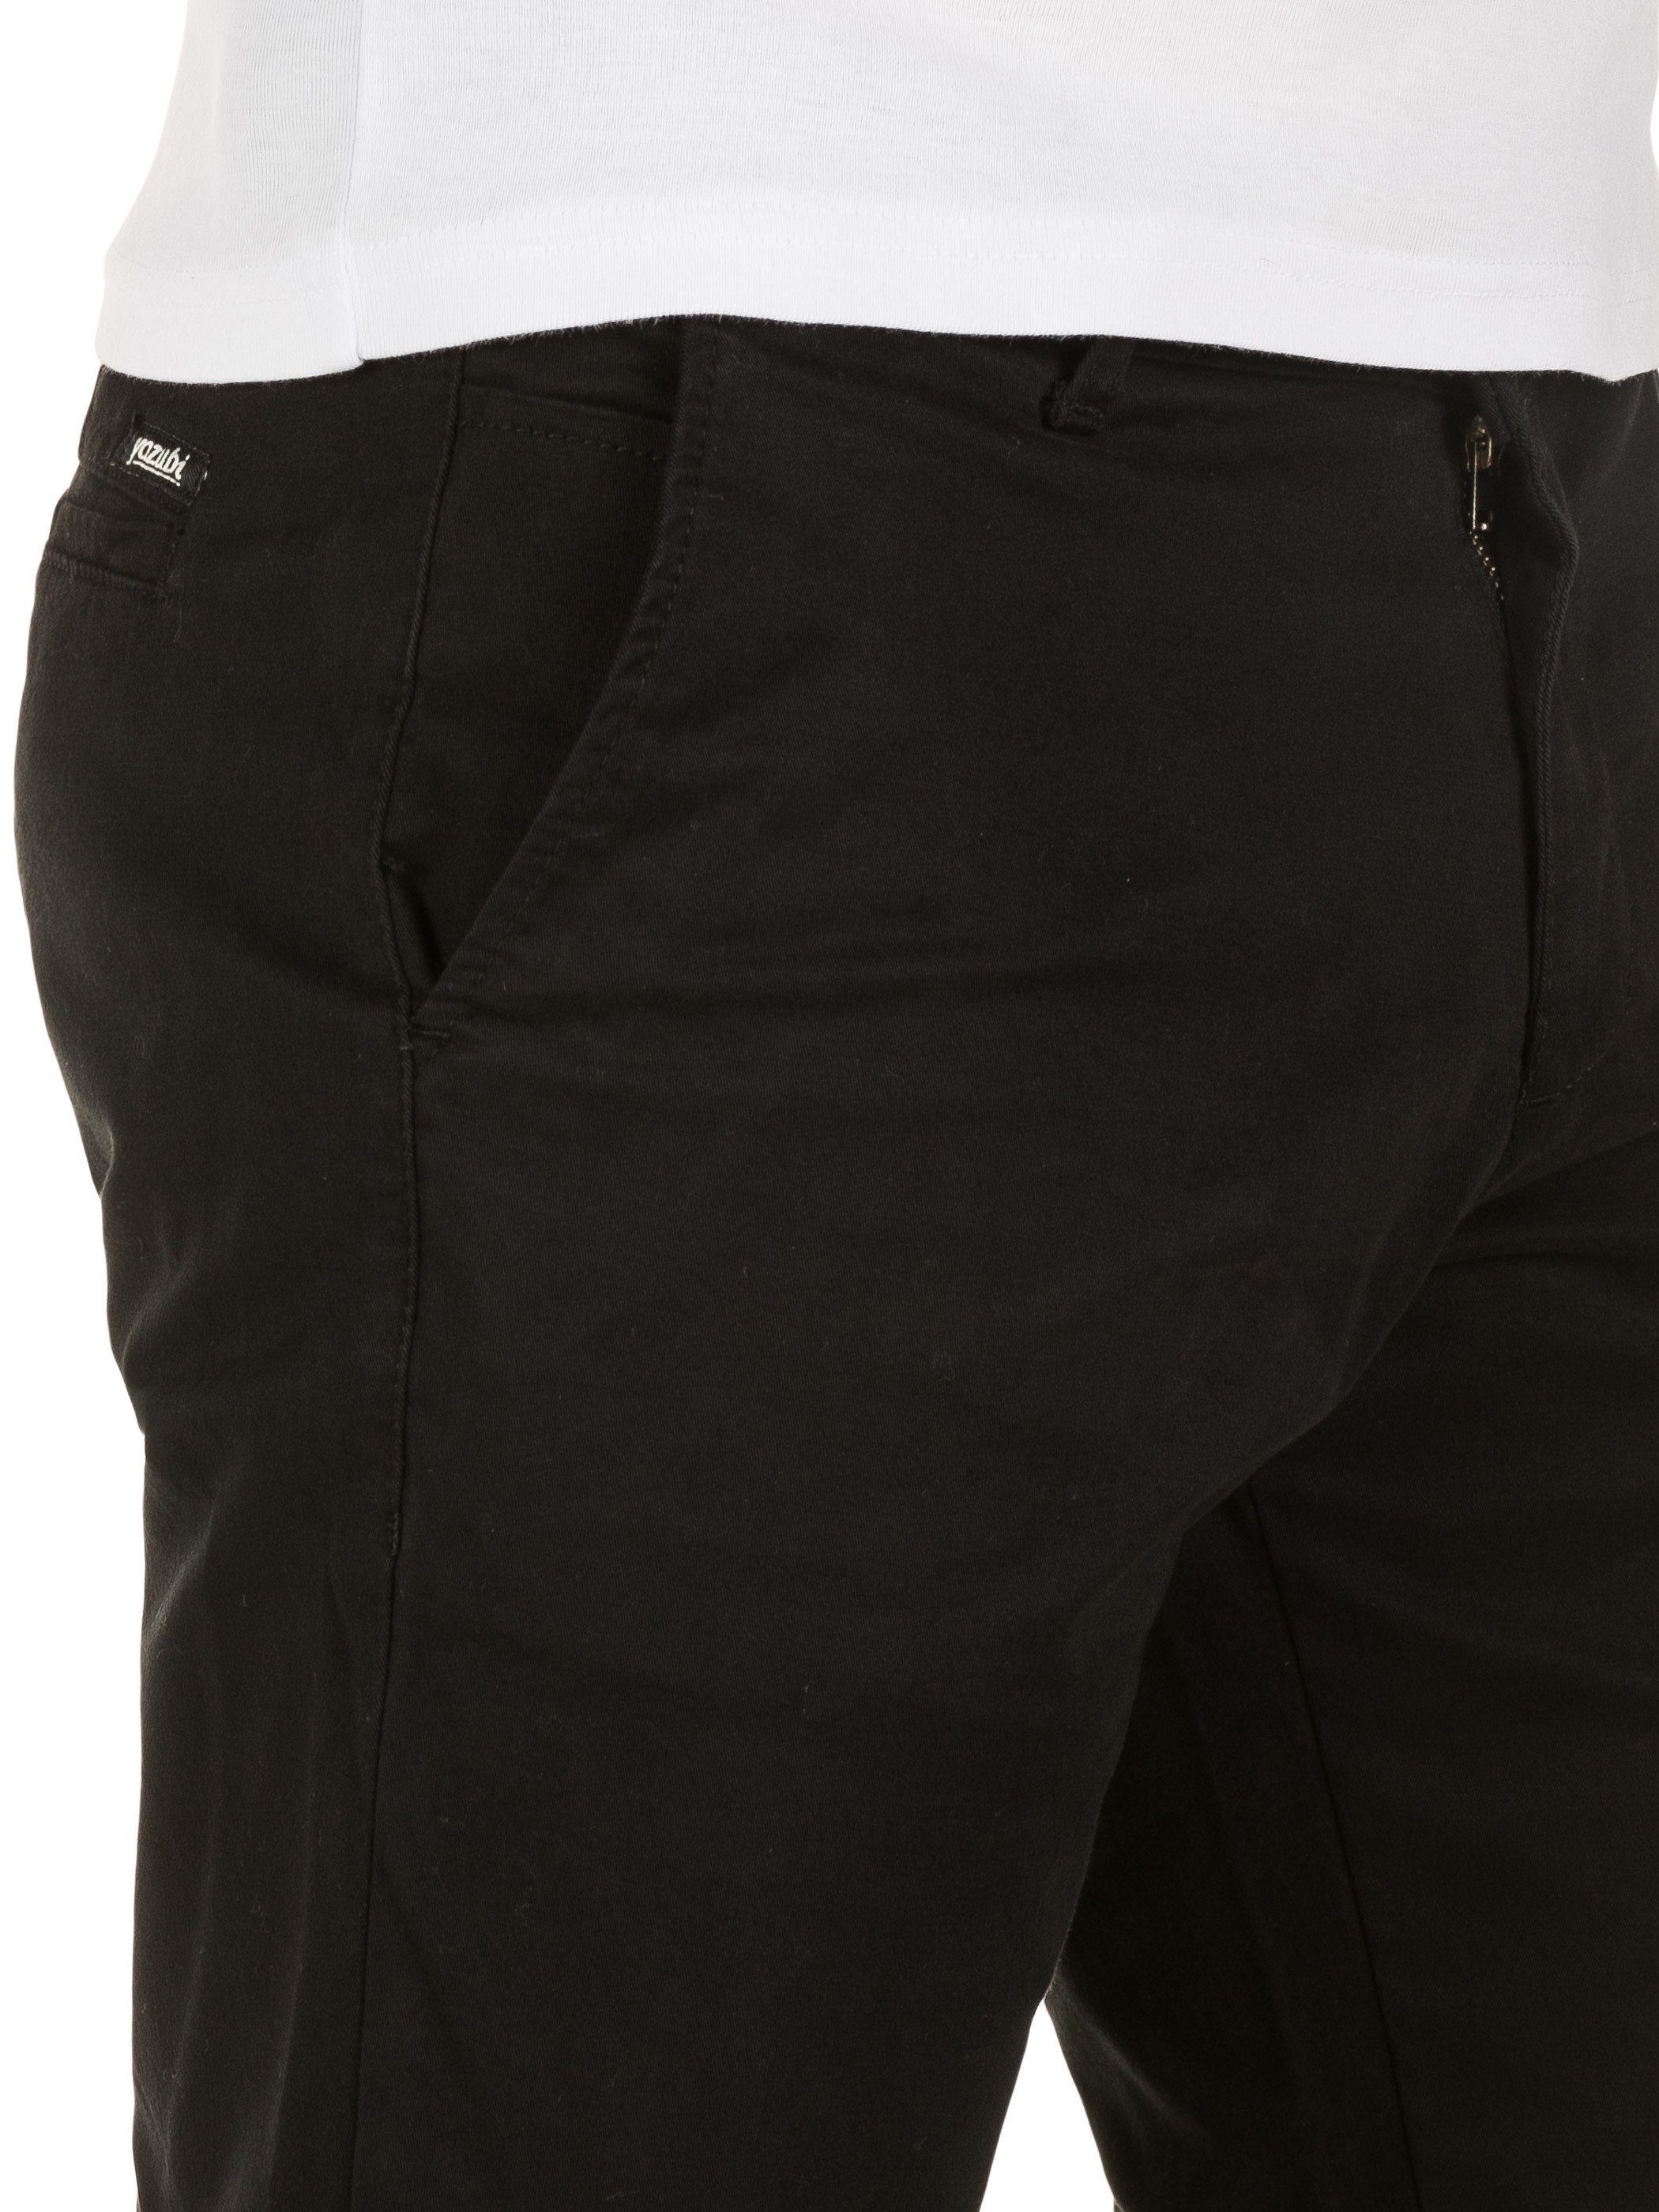 Schwarz ( hohem Chinohose Tragekomfort M192 mit 194008) Pants black Yazubi Chino